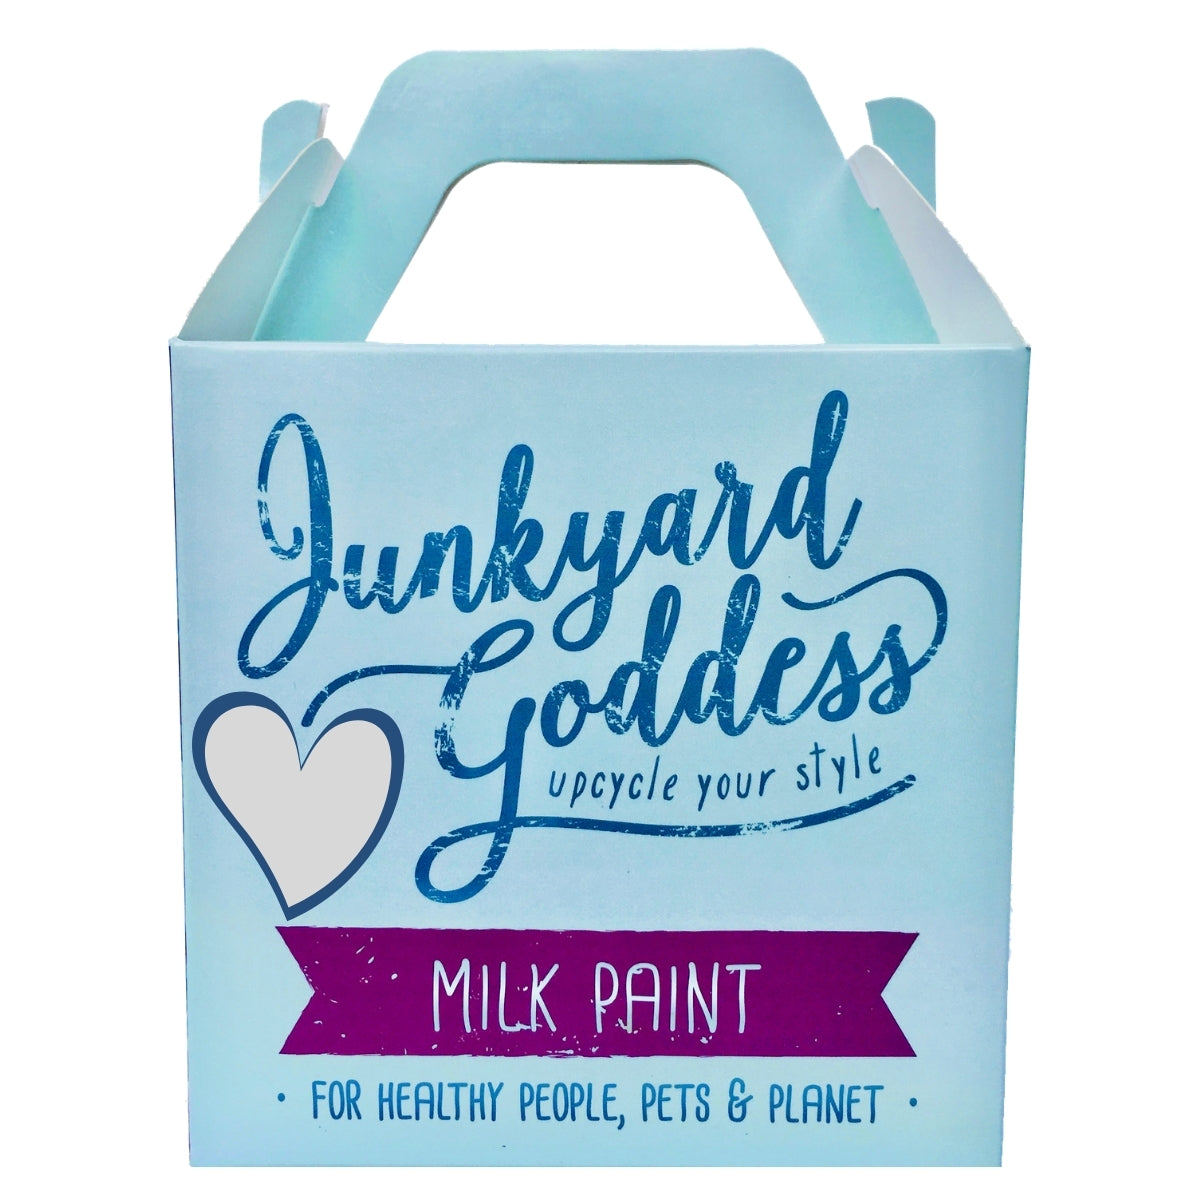 Real Milk Paint Pint / Soft White